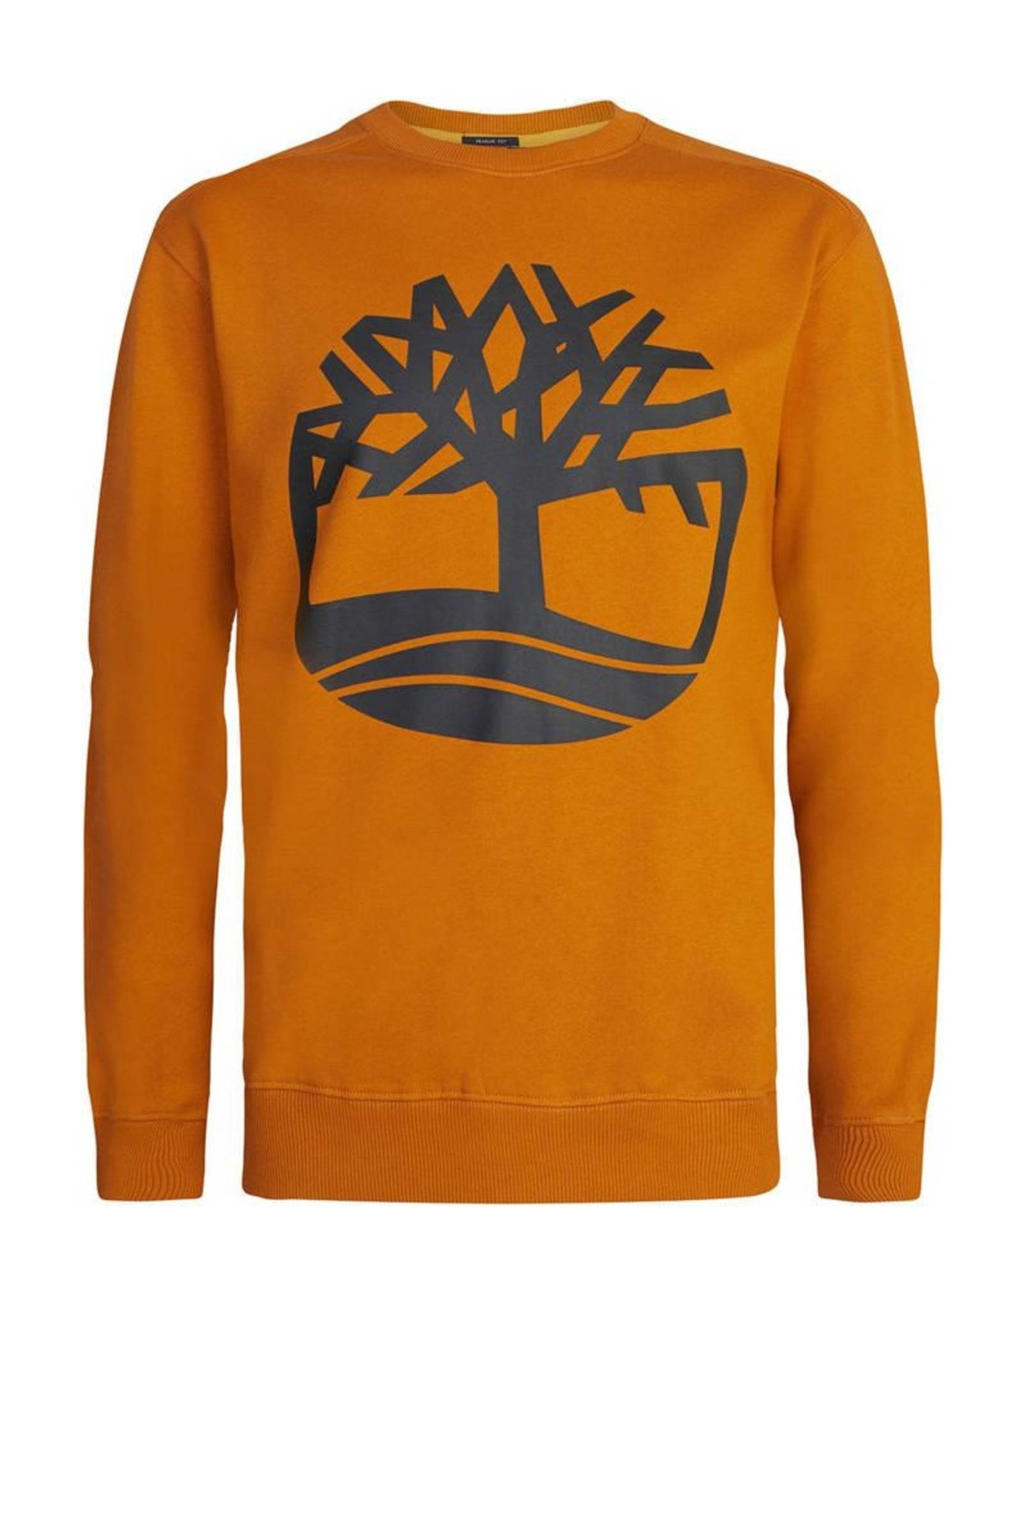 Timberland sweater met printopdruk cognac